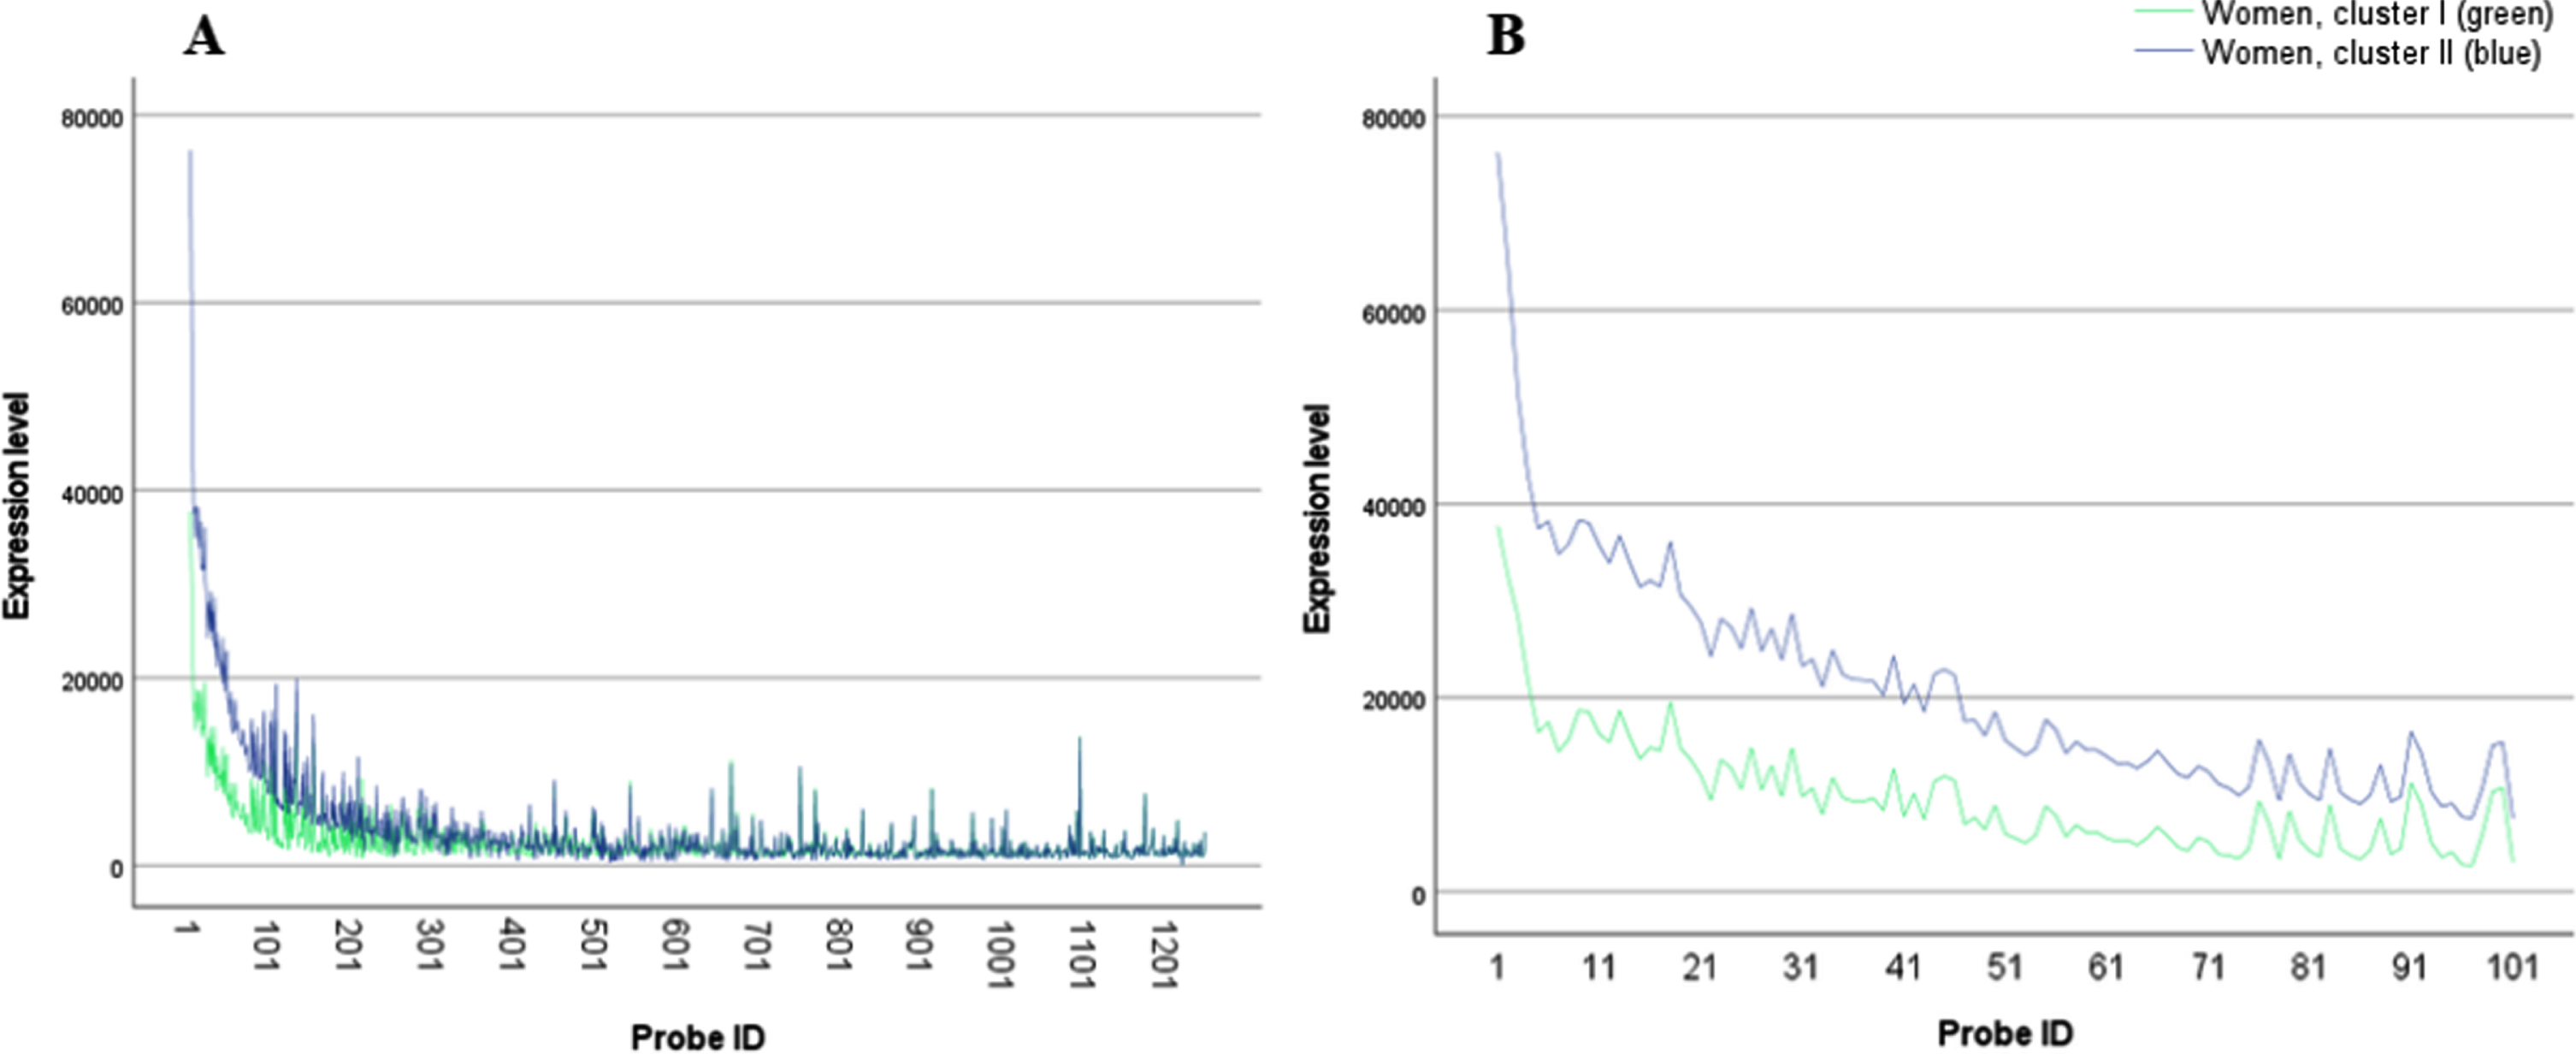 A) Women transcriptomic profiles, cluster I (blue) and II (green); B) Women transcriptomic profiles, cluster I (blue) and II (green) zoom in on probes 1– 100.